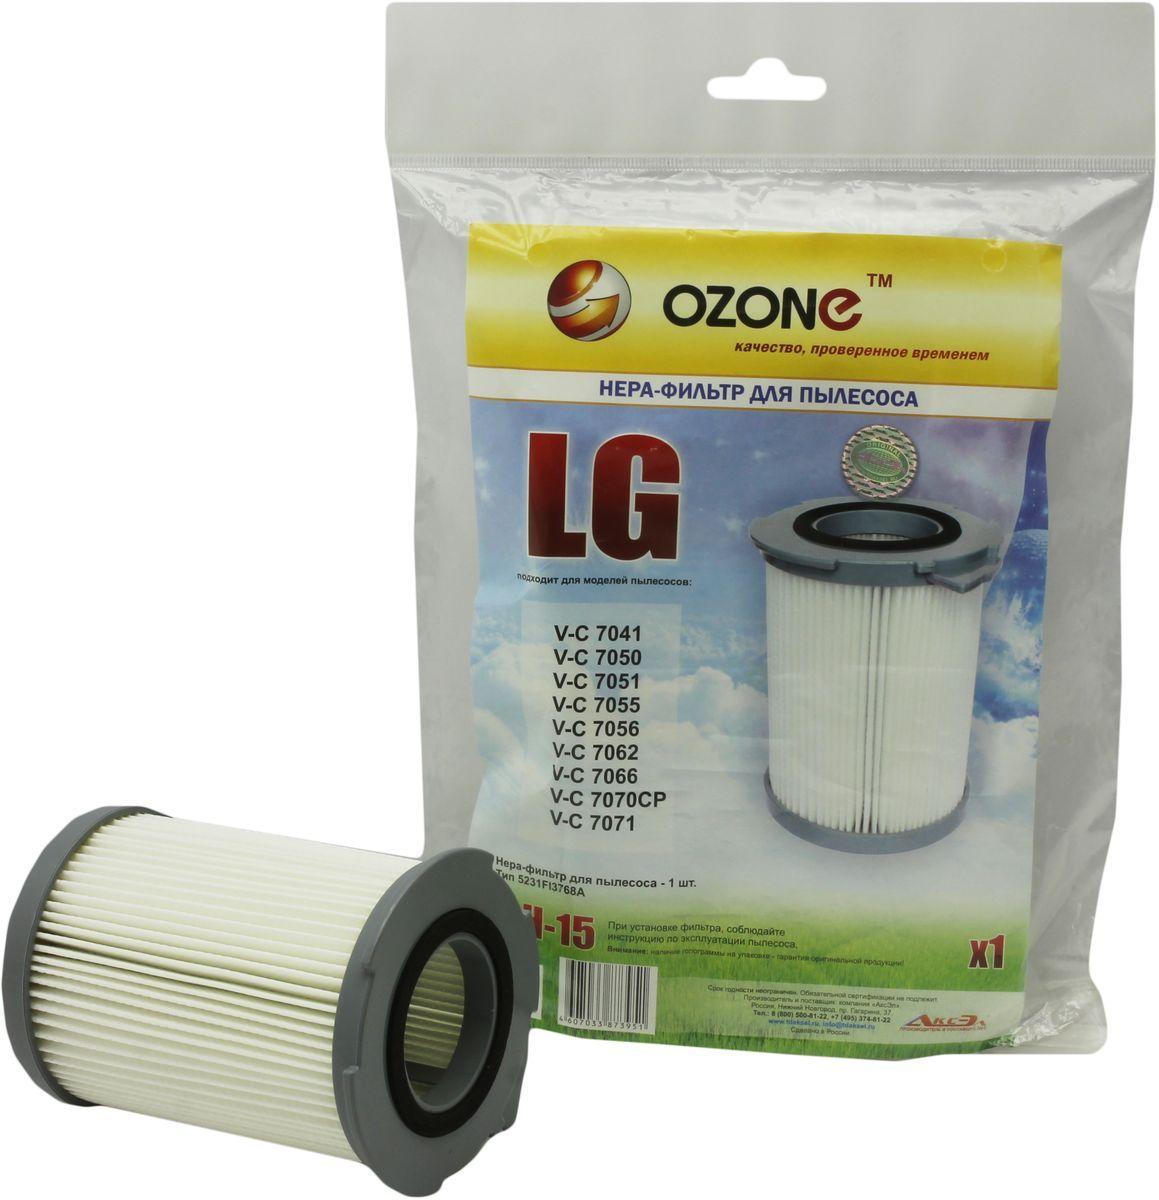 Microne H-15 НЕРА-фильтр для пылесоса LG OZONE